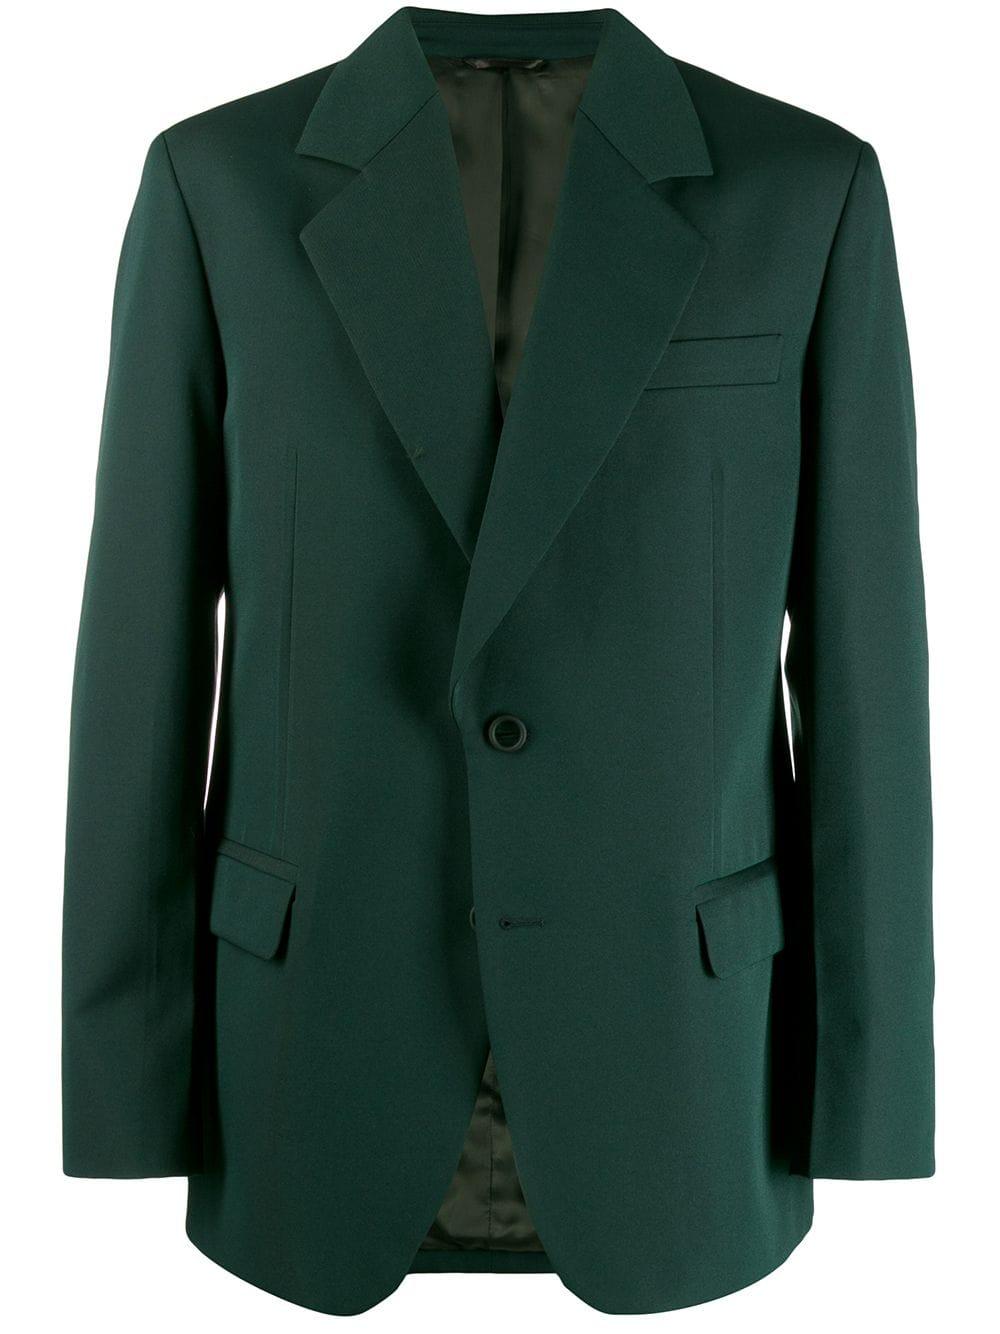 Acne Studios Cotton Classic Tailored Blazer in Green for Men - Lyst